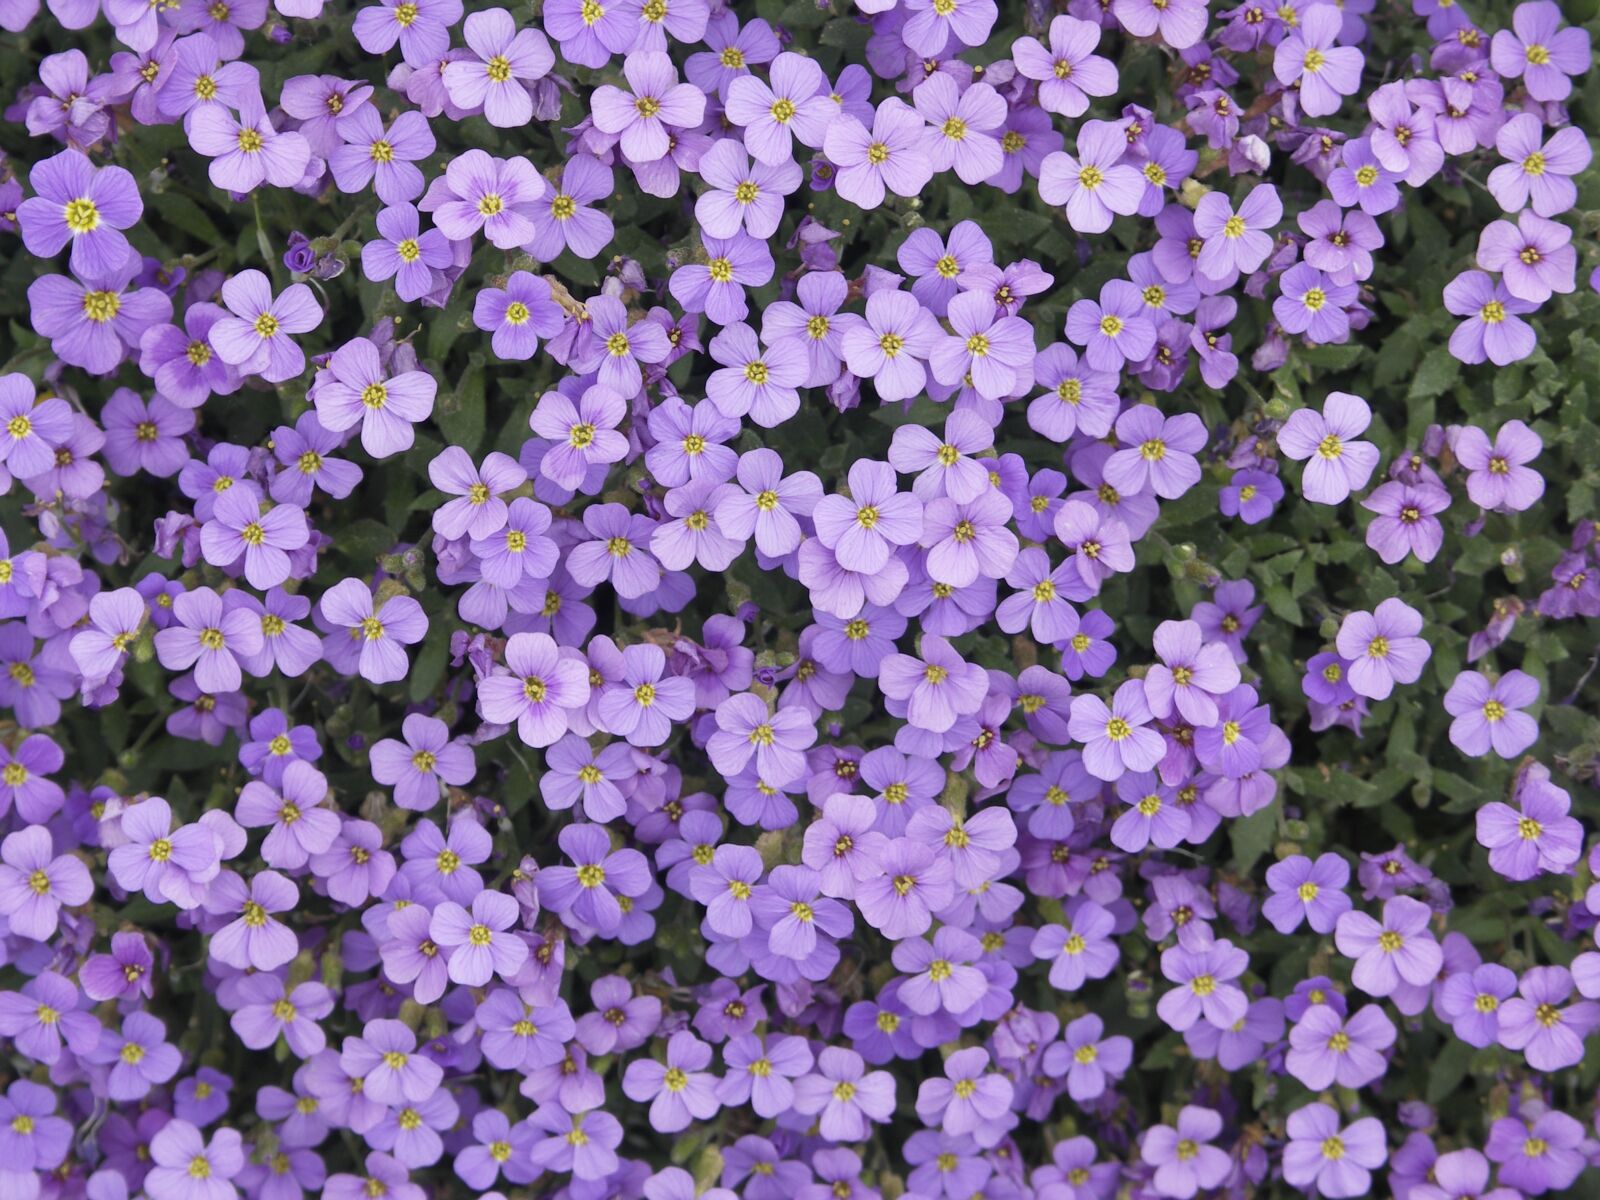 KONICA MINOLTA DiMAGE A200 sample photo. Flowers, purple, purple nature photography